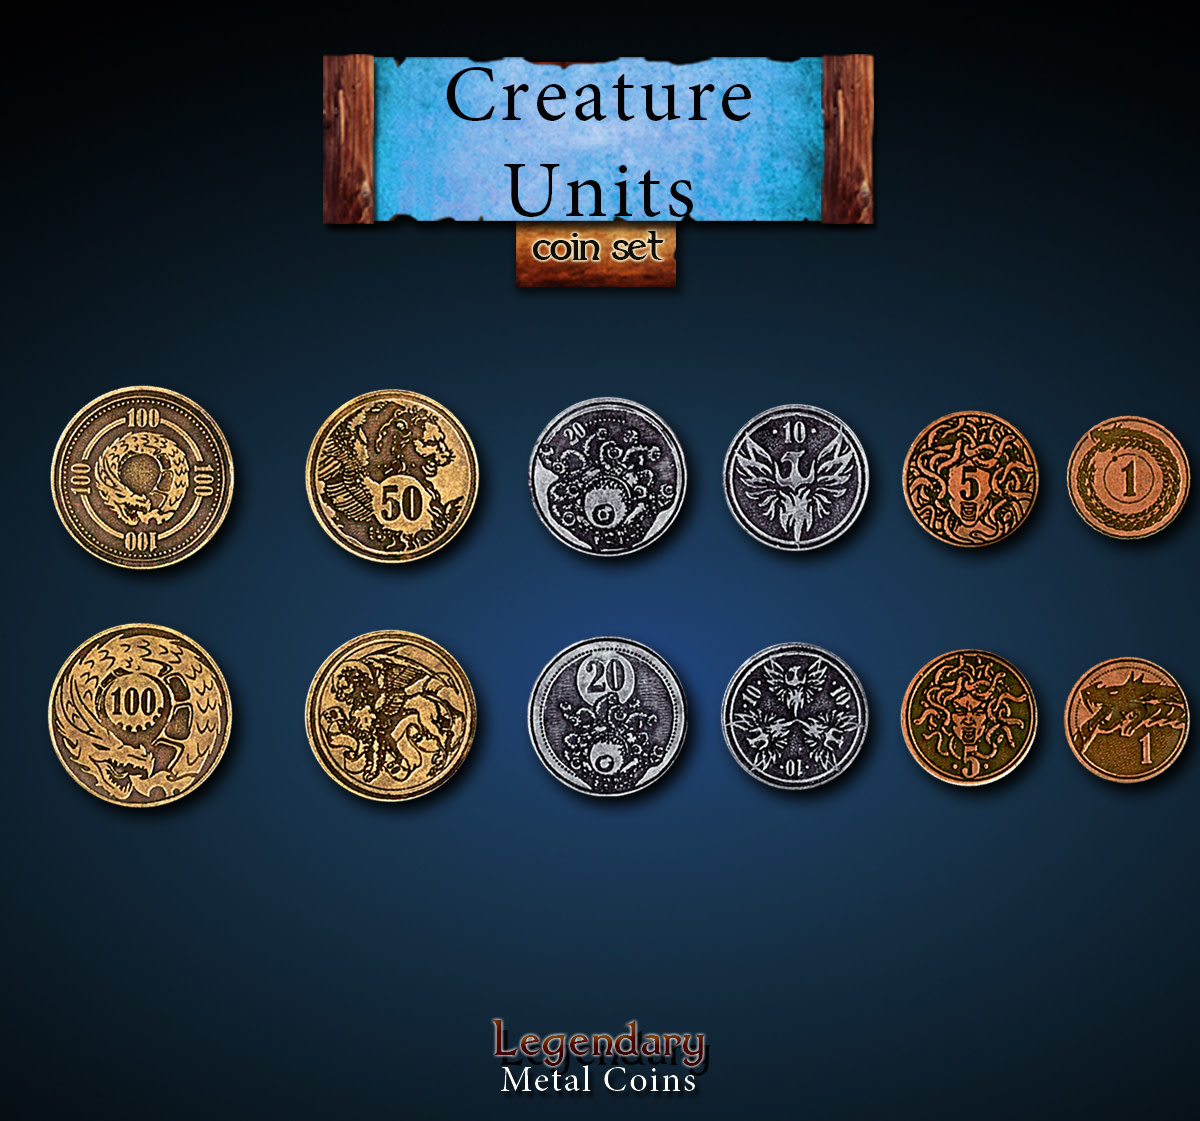 Legendary Metal Coins: Creature Units (30pcs)